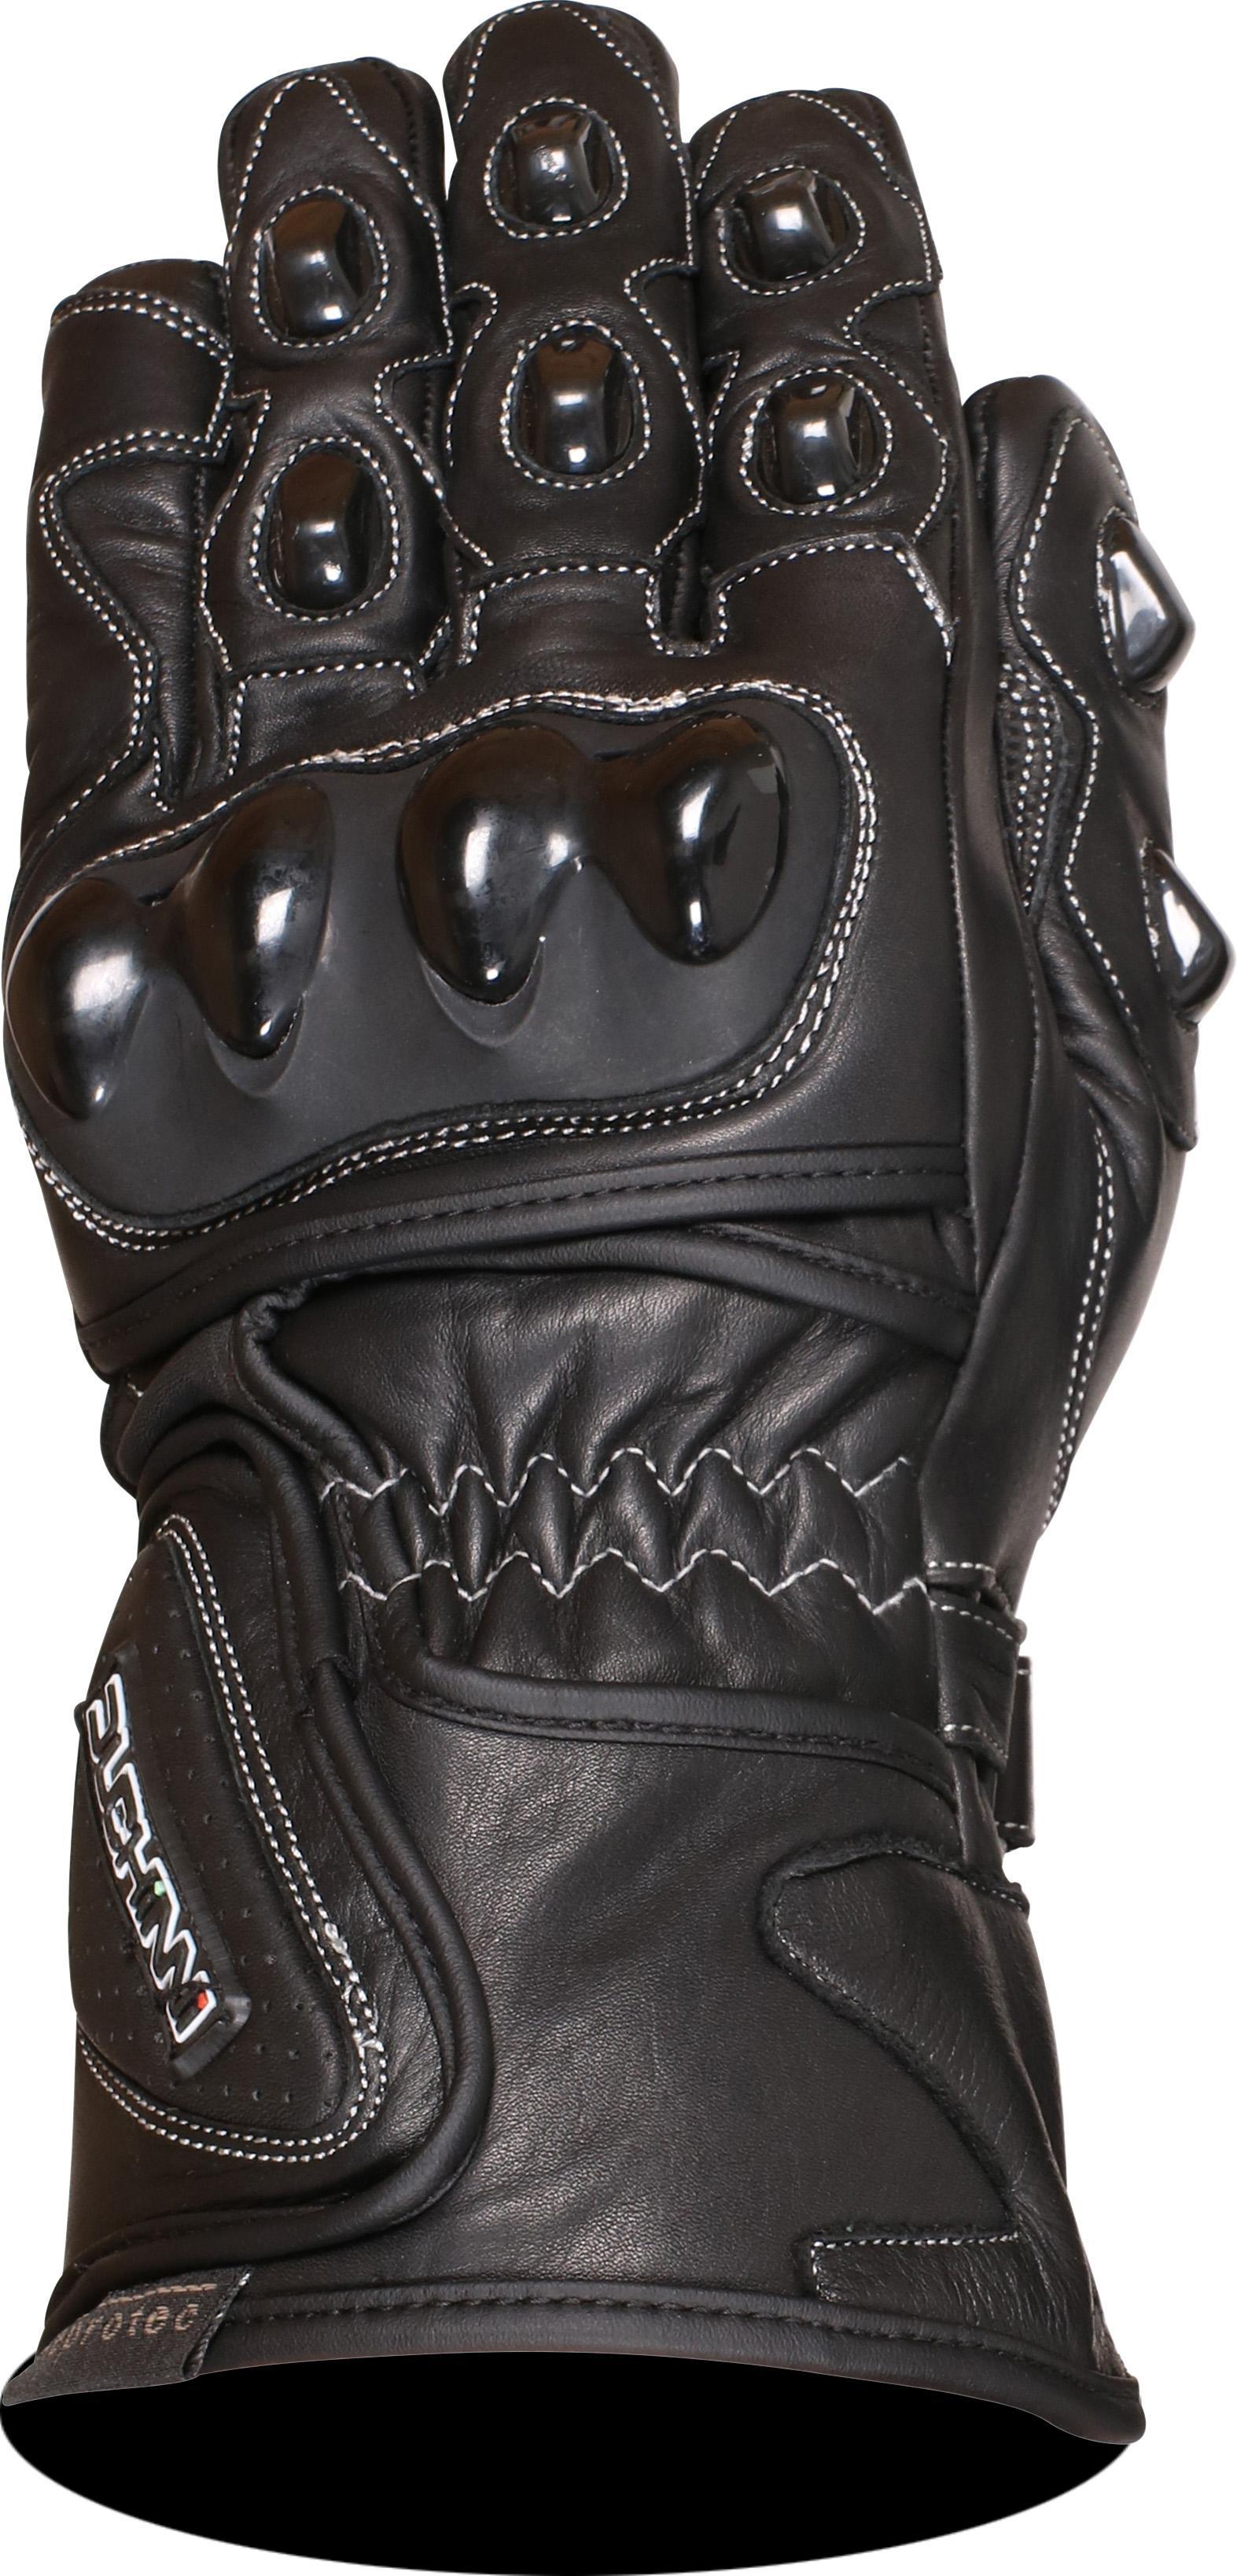 Duchinni Dr1 Motorcycle Gloves - Black, Xl